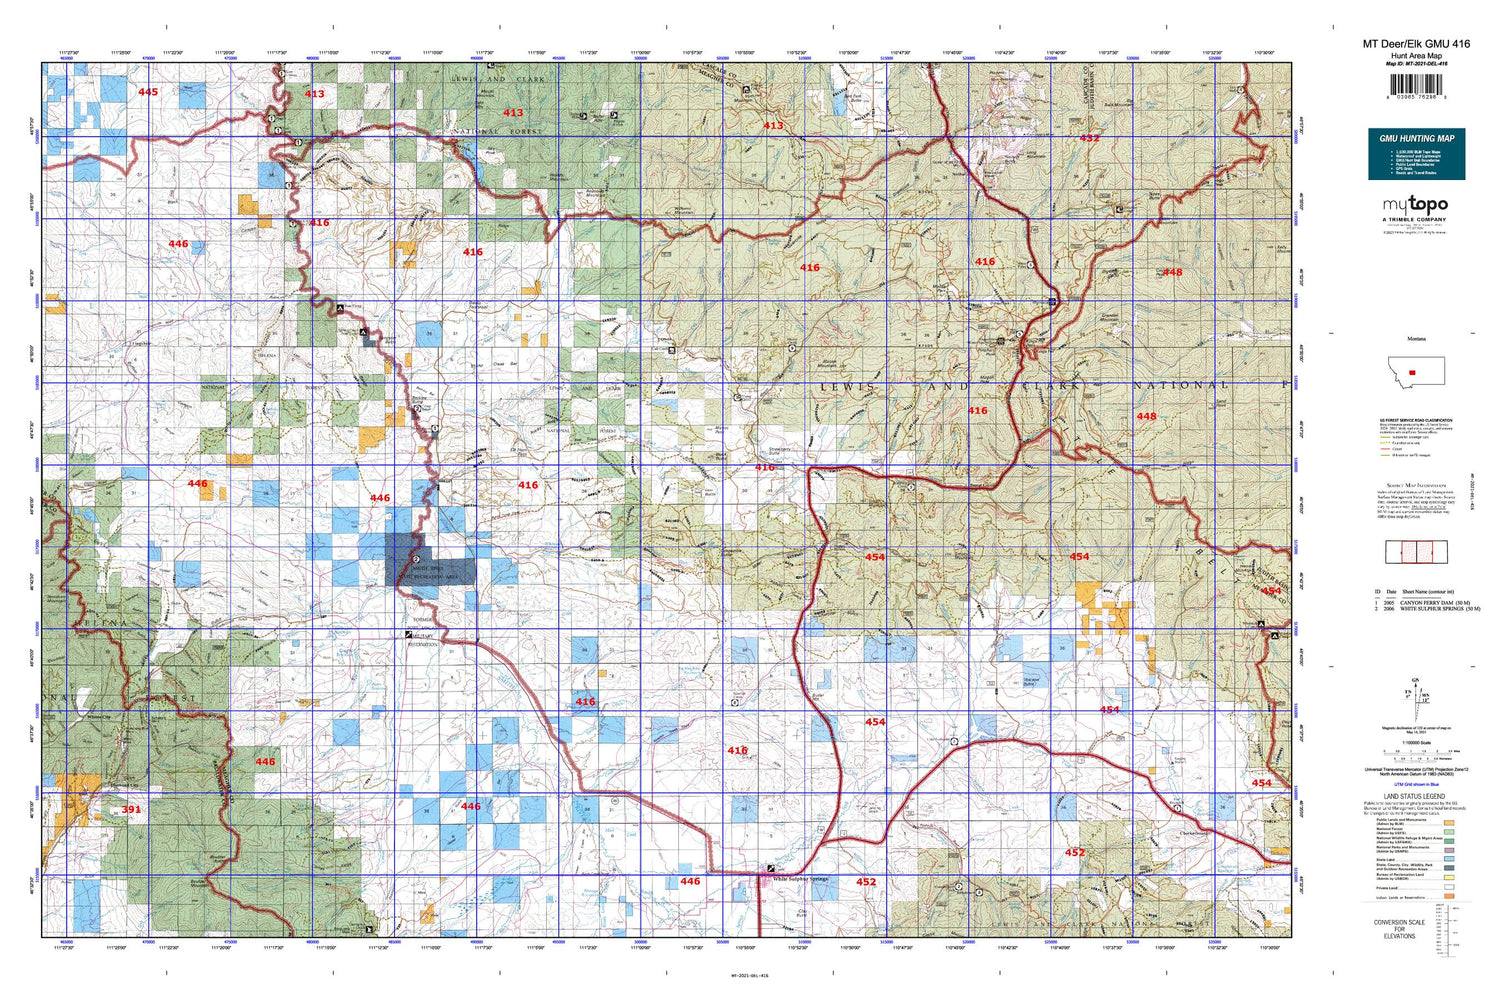 Montana Deer/Elk GMU 416 Map Image